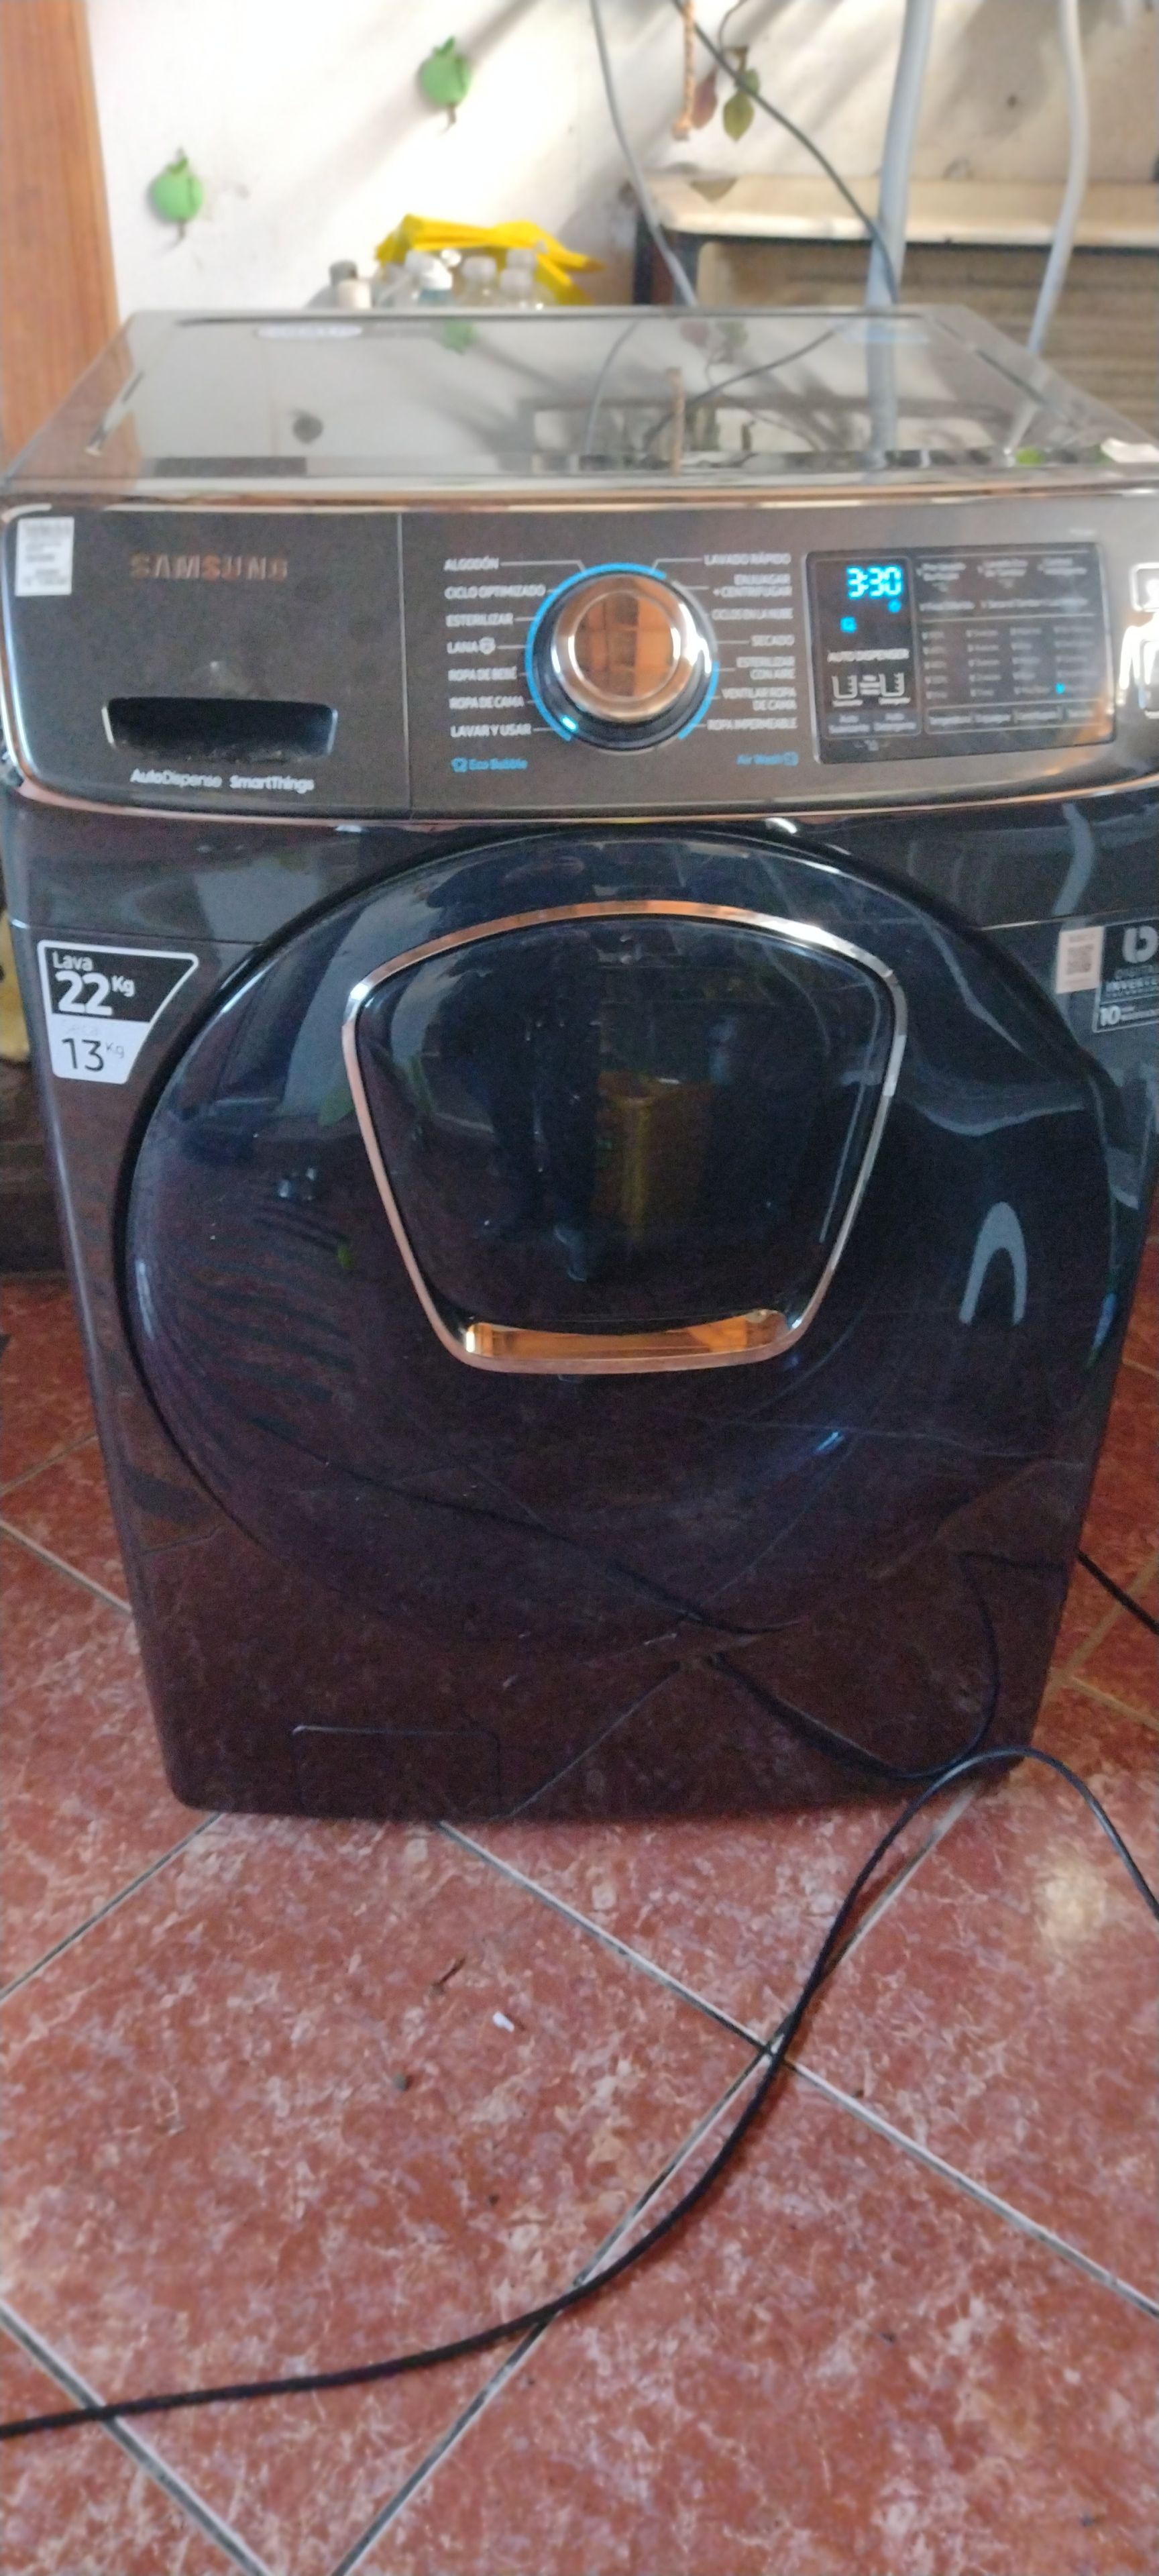 Lavadora secadora samsung 2x1 wd22 - Samsung Community